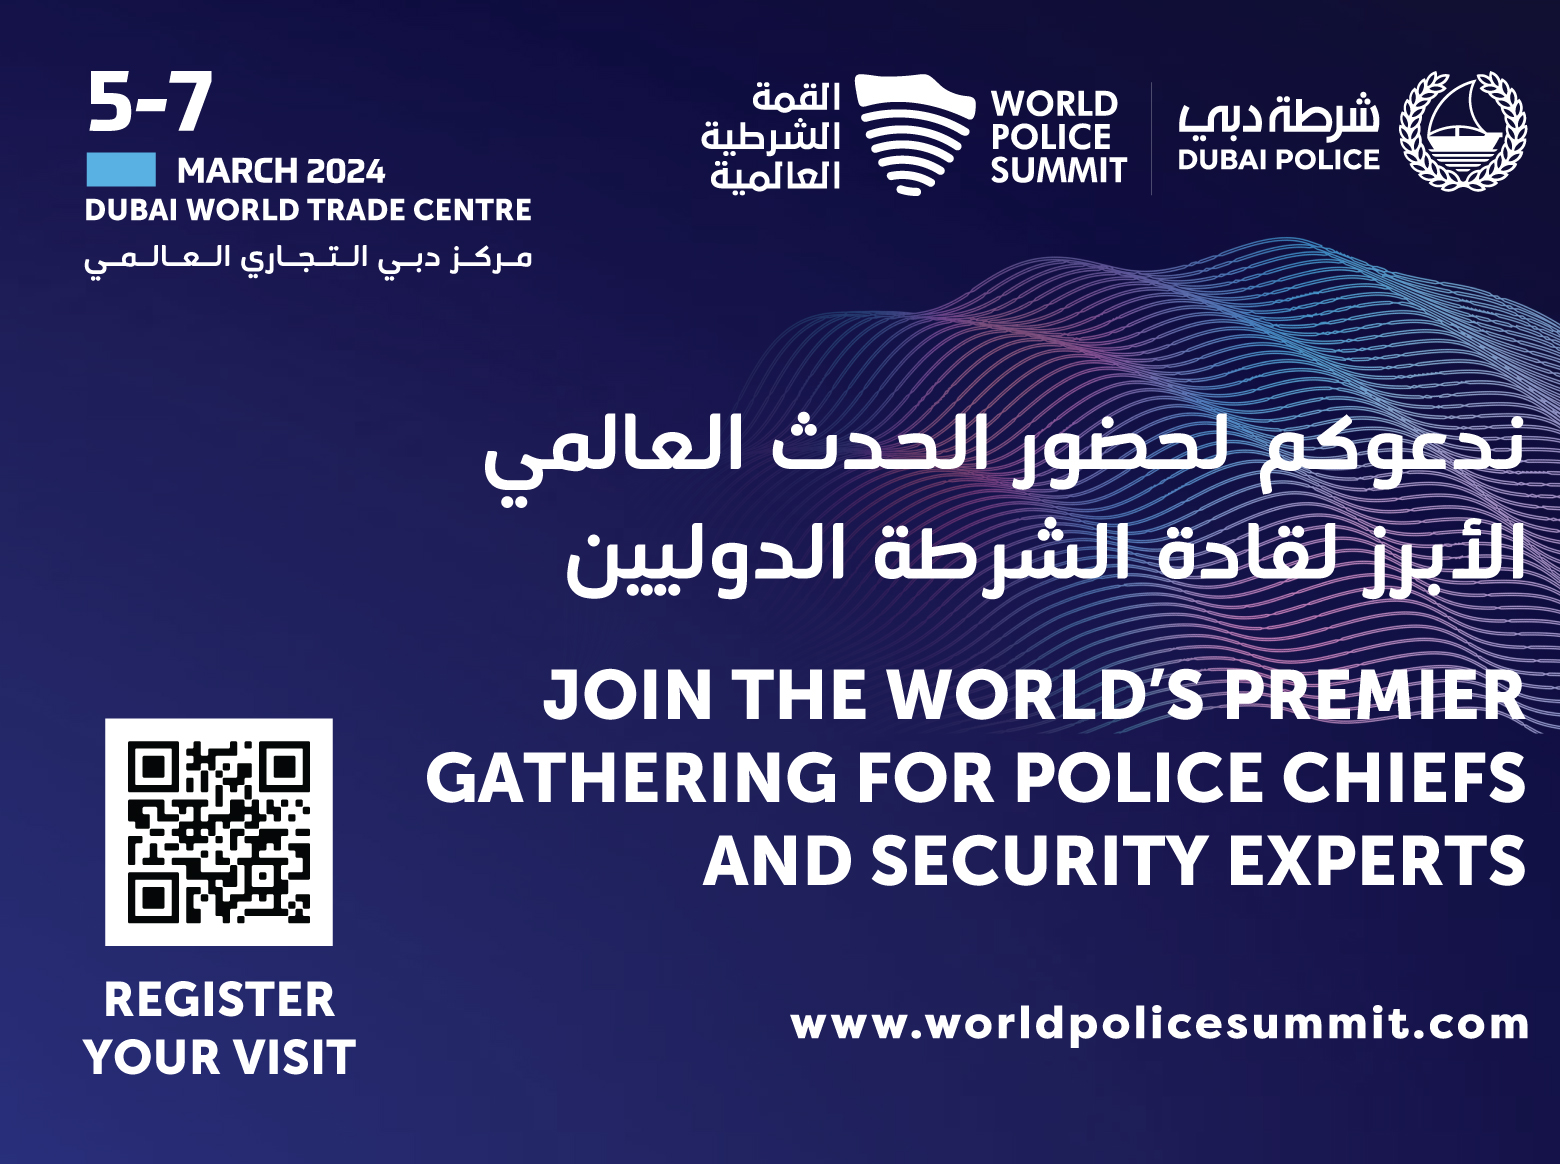 emirates247.com - World Police Summit&#8230; An Inclusive International Platform